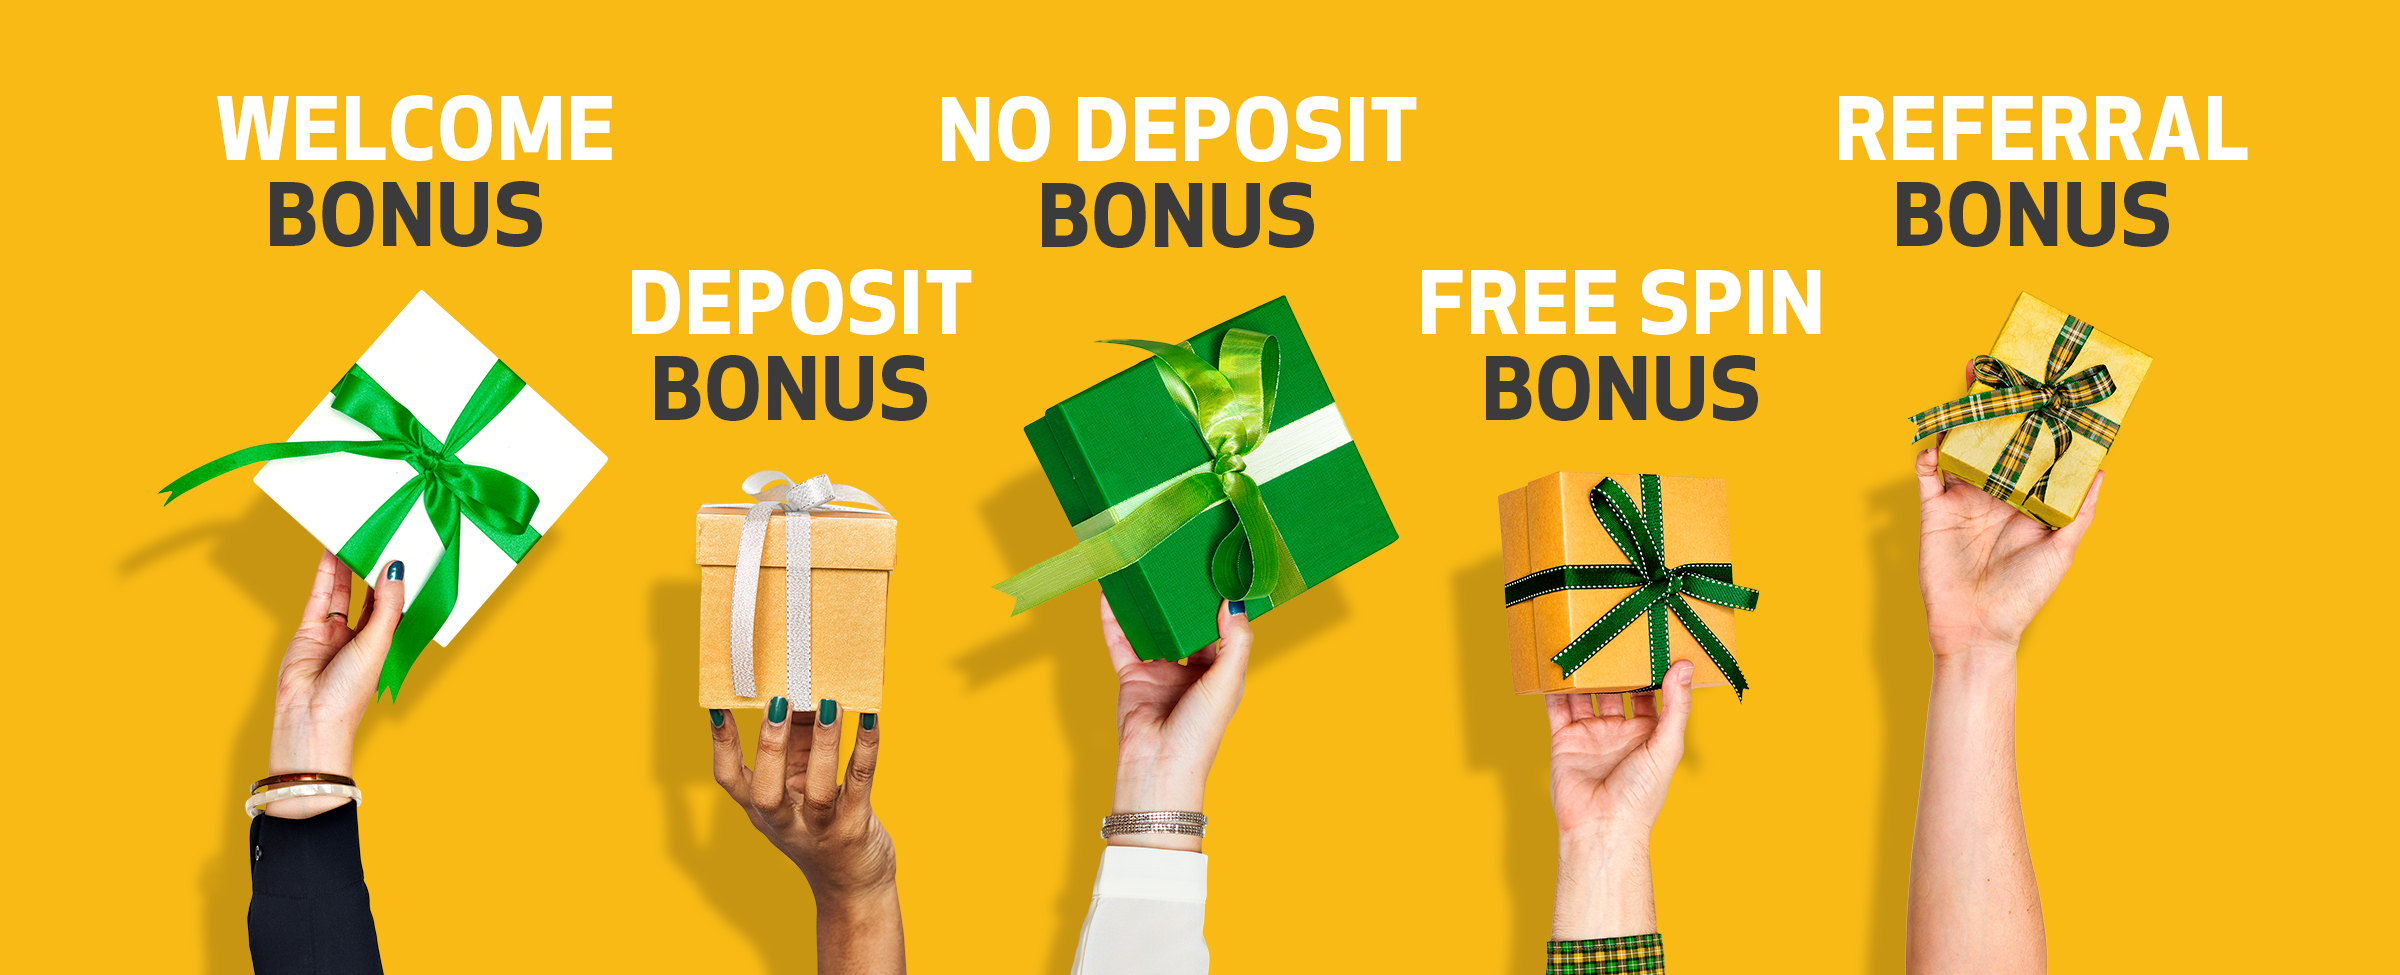 There’s several kinds of online bonuses including Welcome Bonus, Deposit Bonus, Match Bonus, No Deposit Bonus and more. Joe explains them to you!